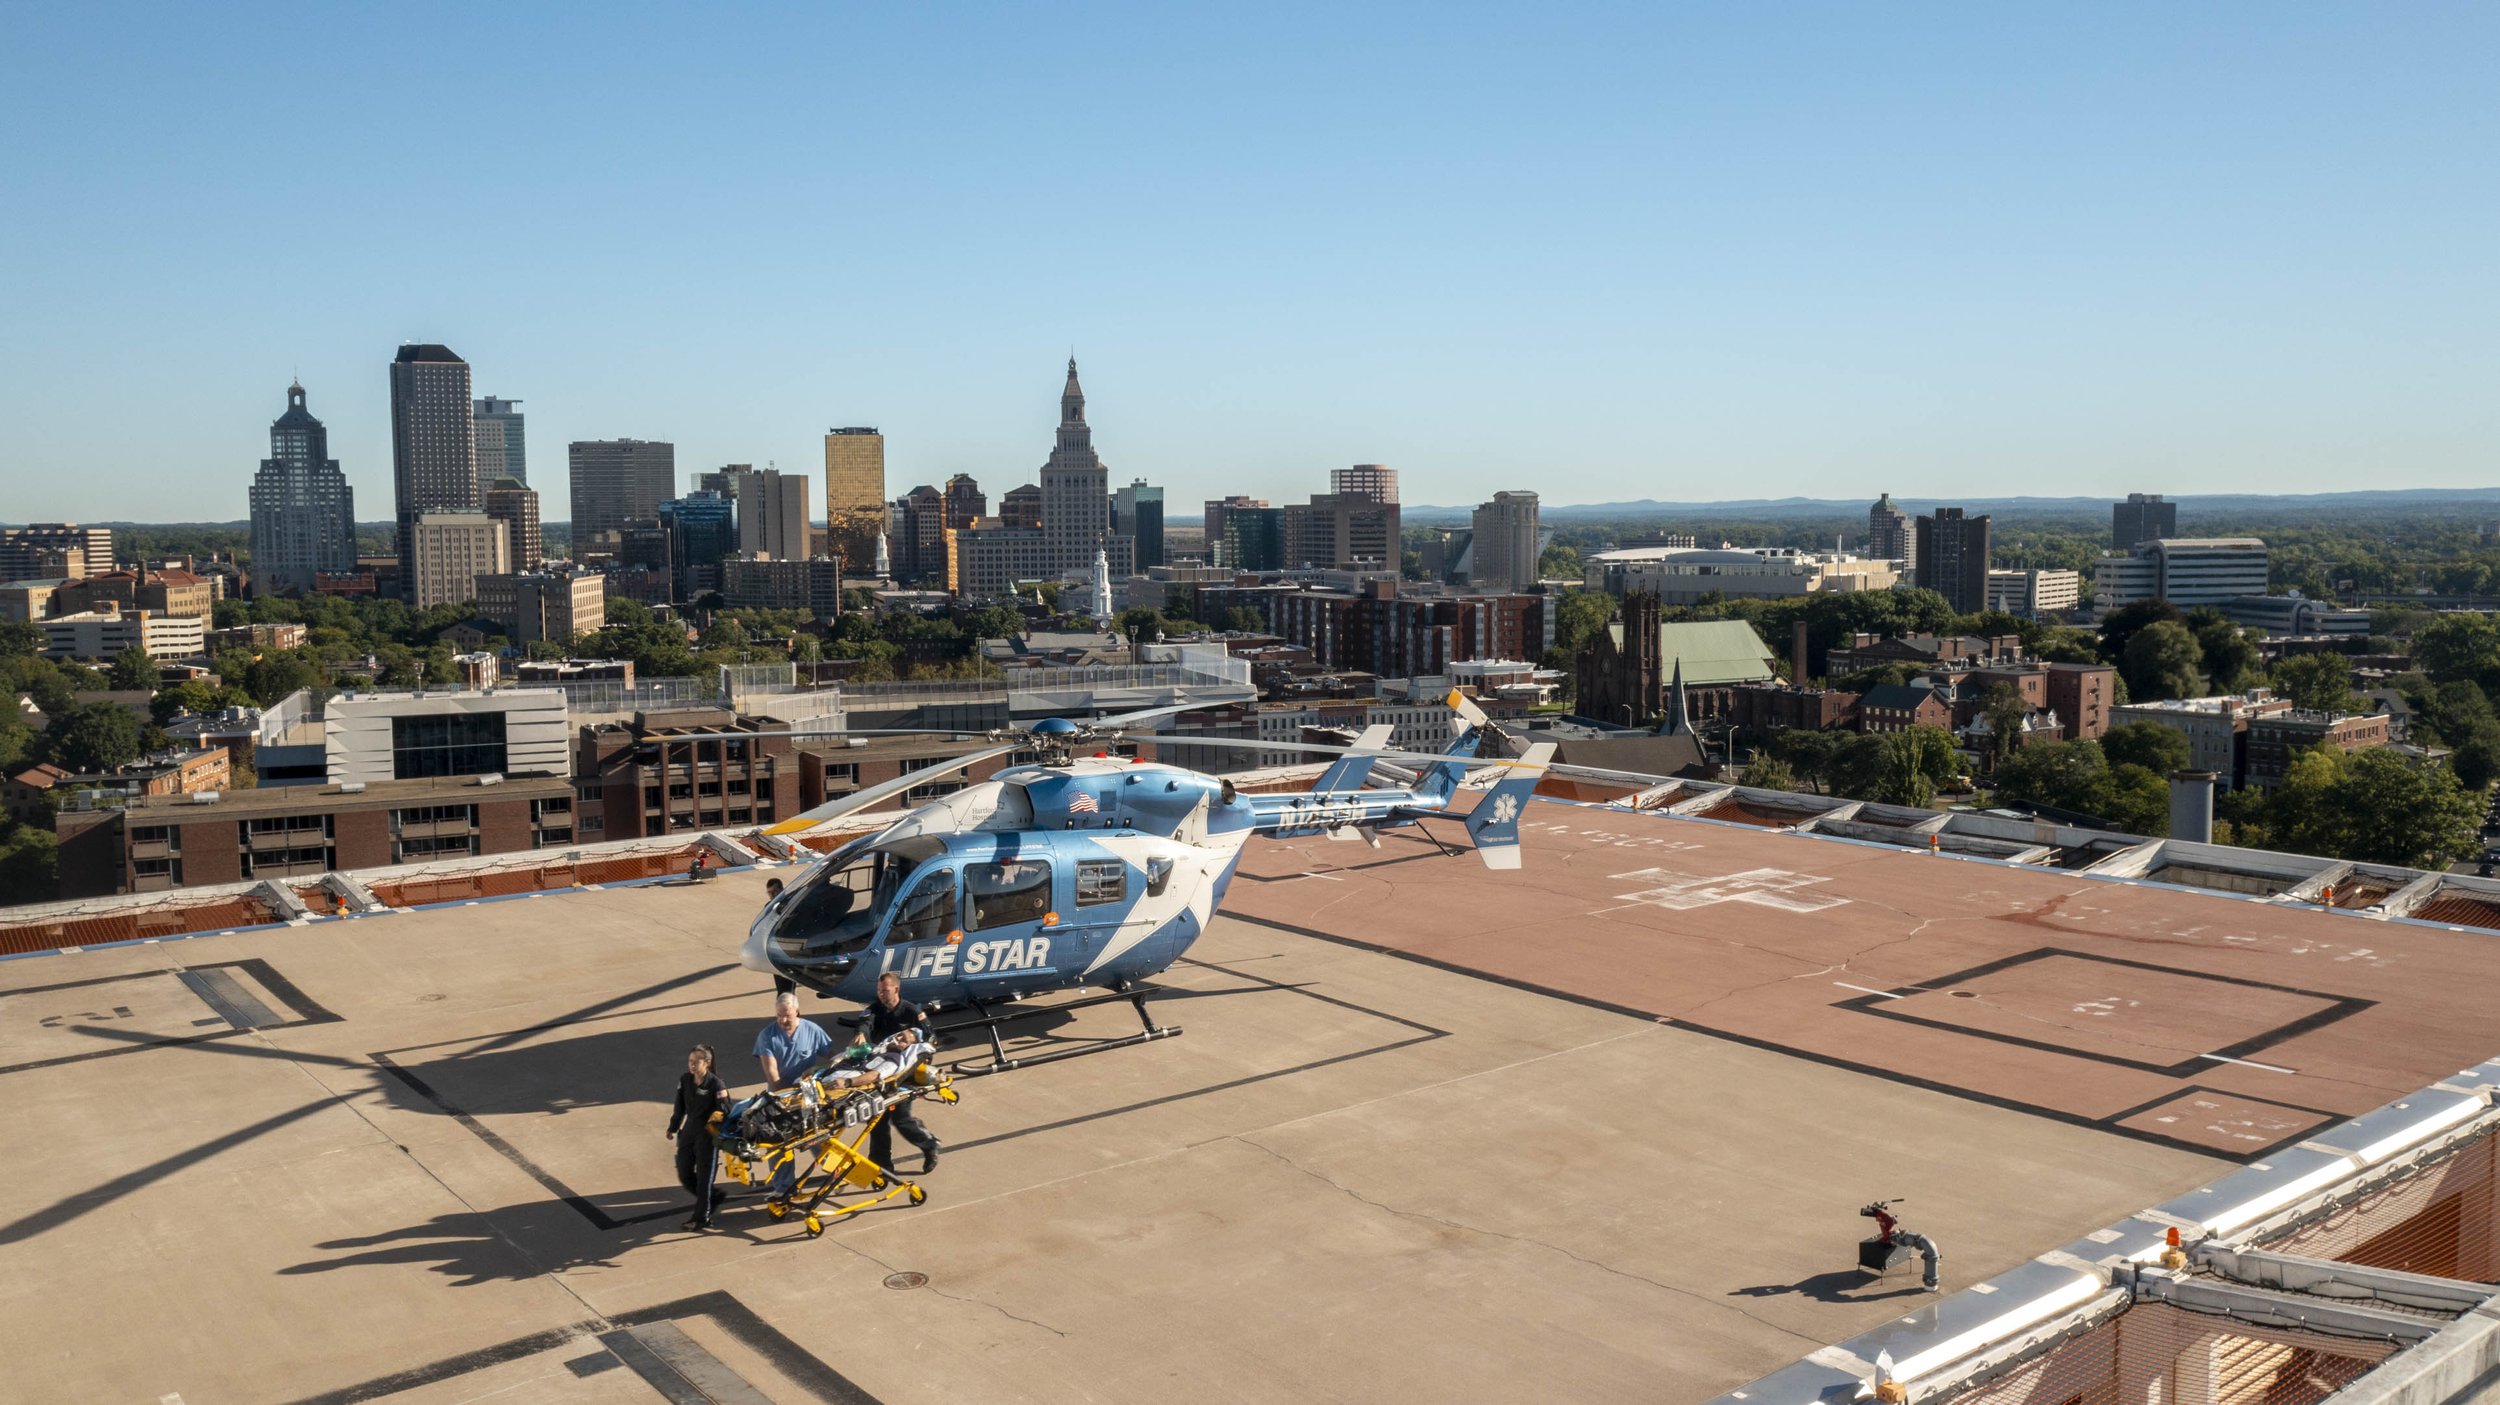 LifeStar Helicopter at Hartford Hospital Helipad - Patient transport simulation.